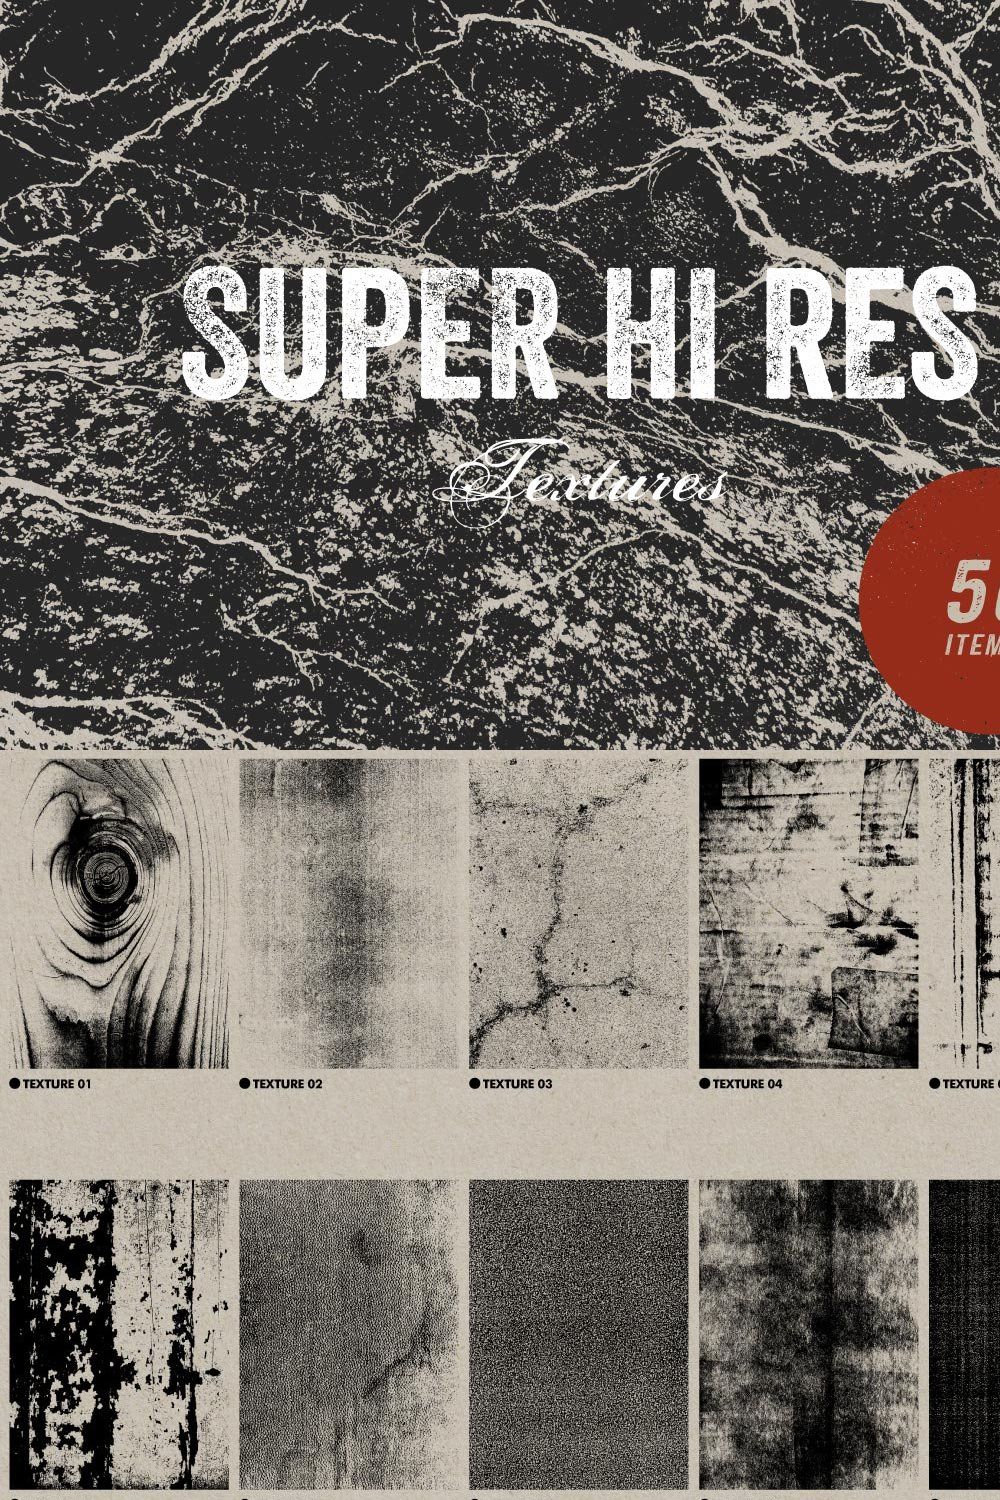 50 Super Hi Res Textures - A0 pinterest preview image.